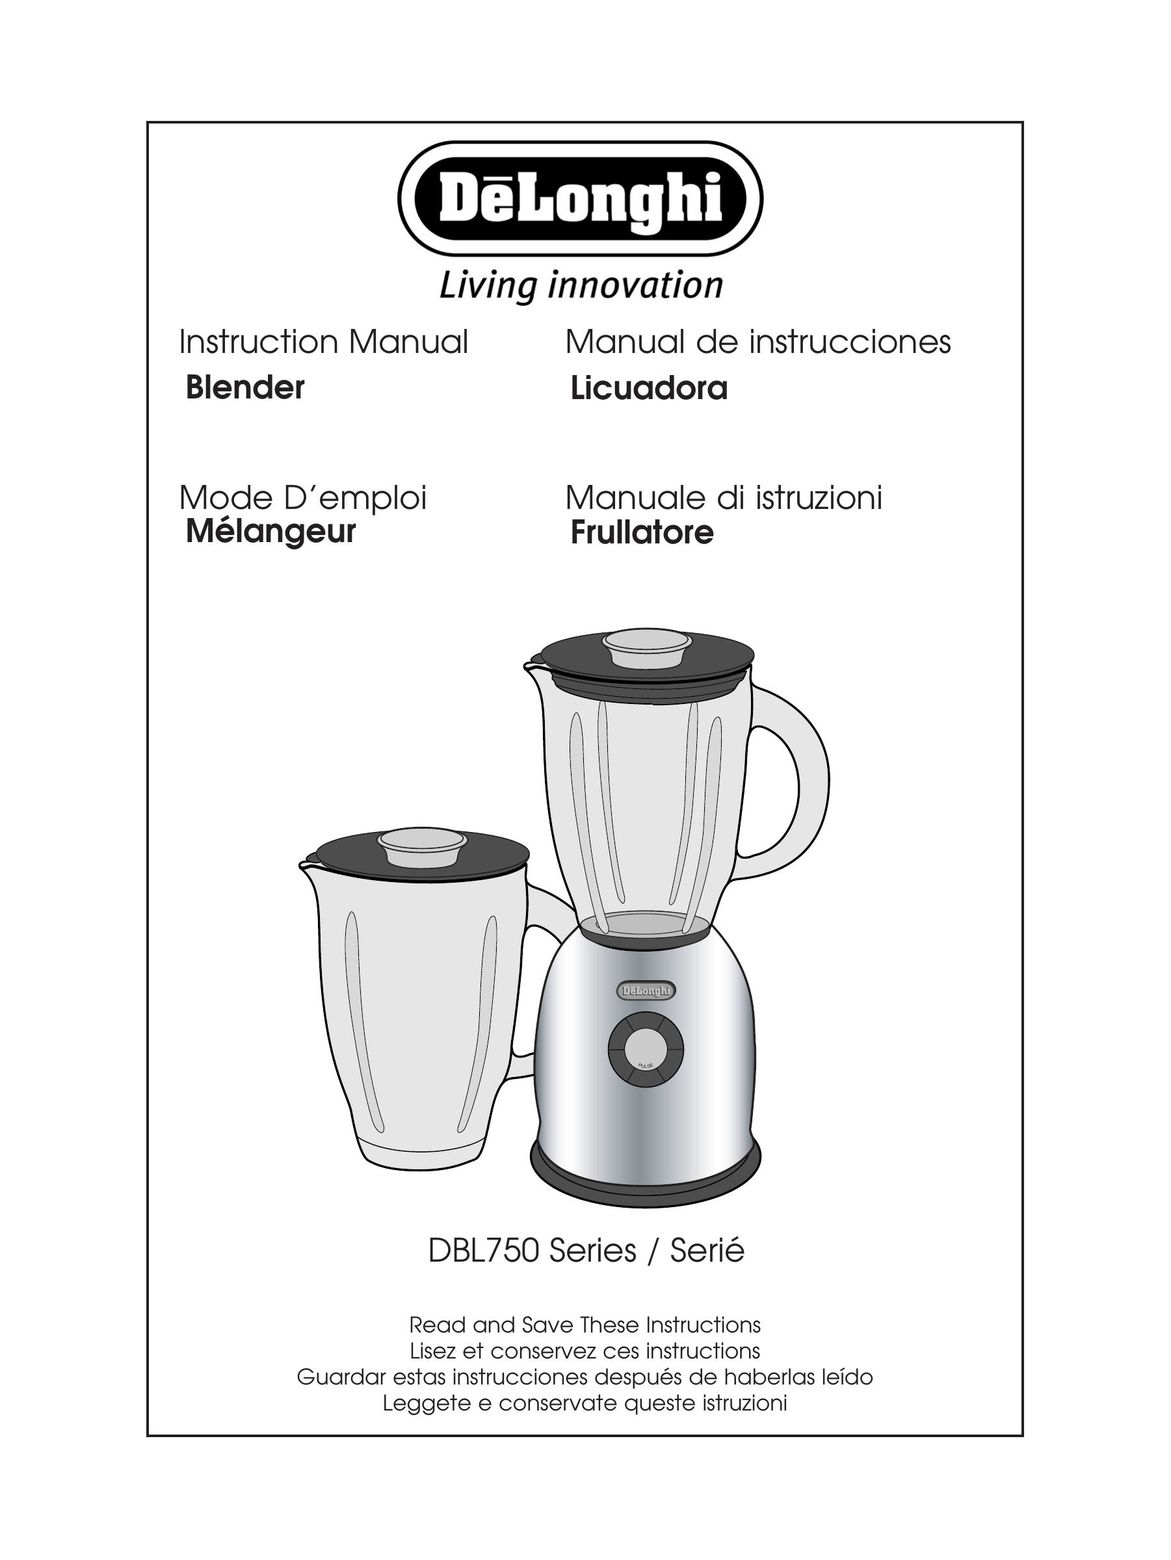 DeLonghi DBL750 Series Blender User Manual